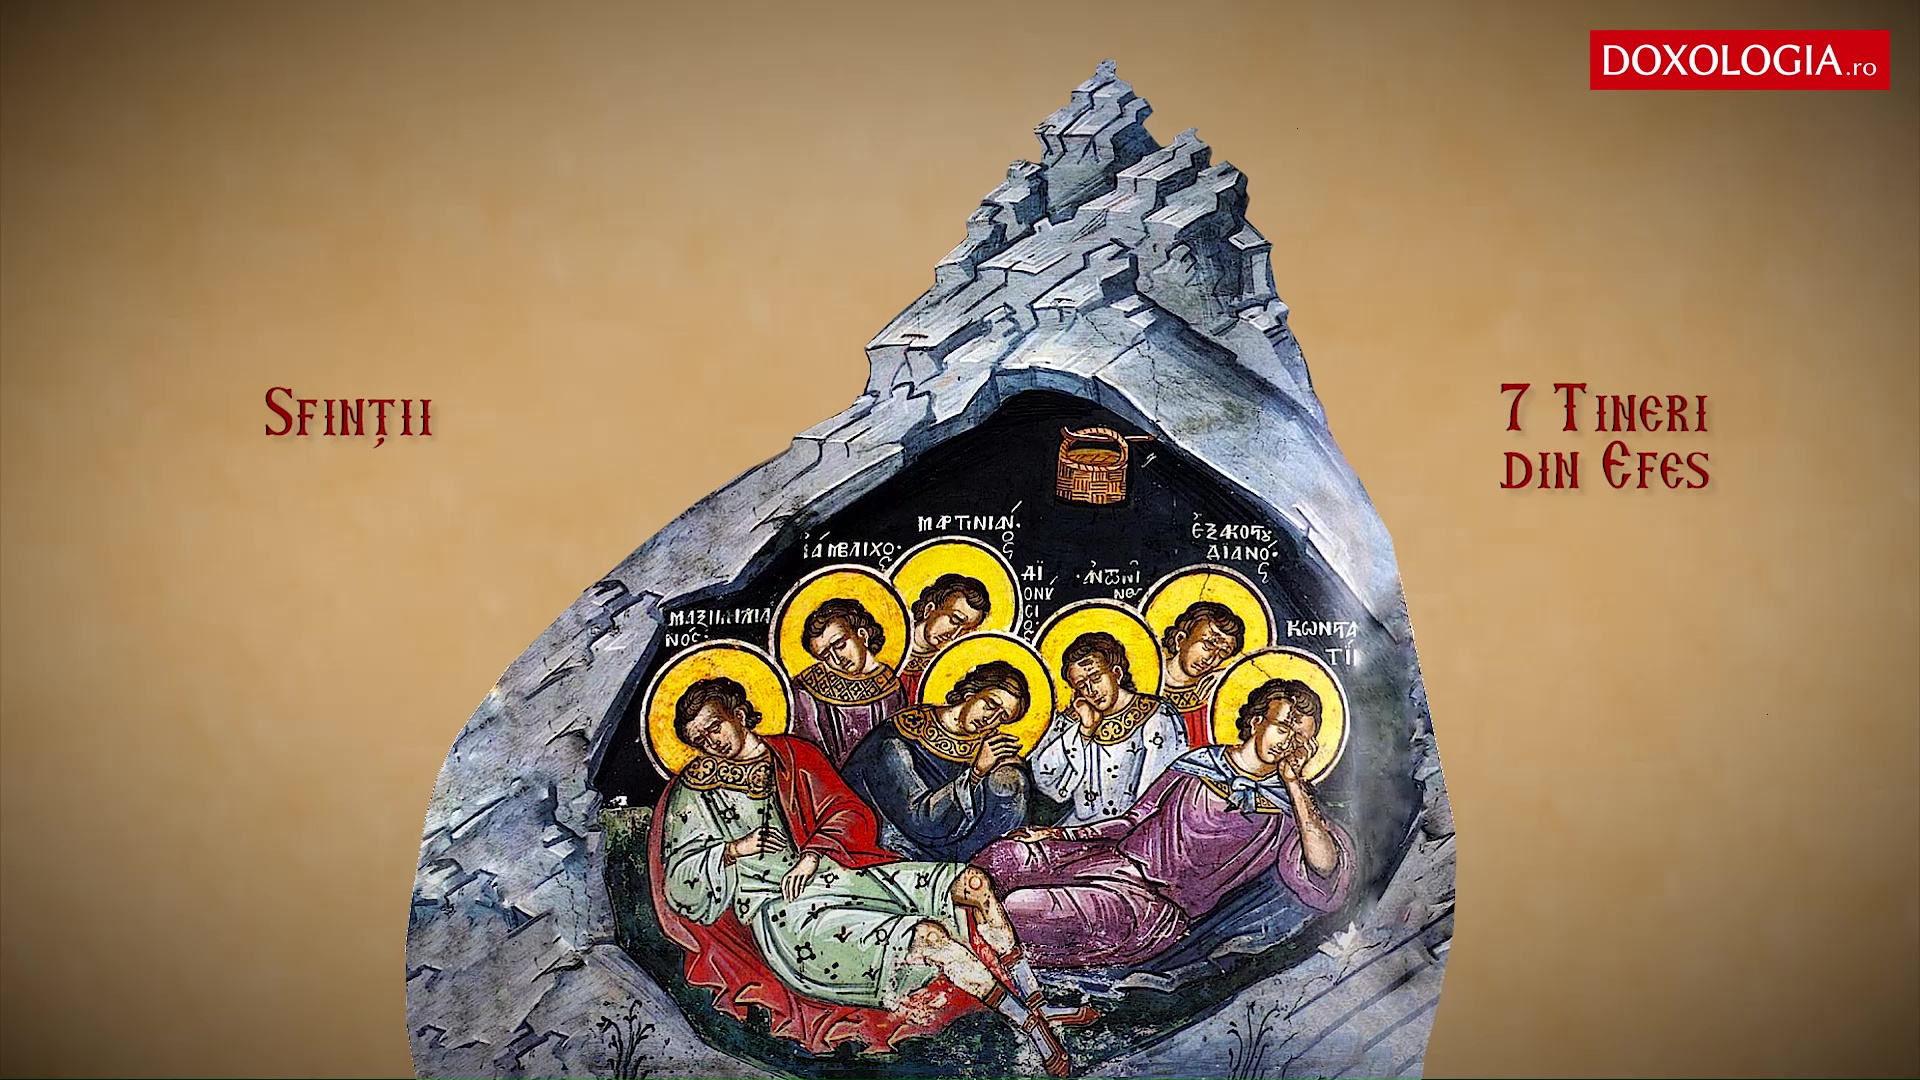 Risultati immagini per Sfinții 7 tineri din Efes